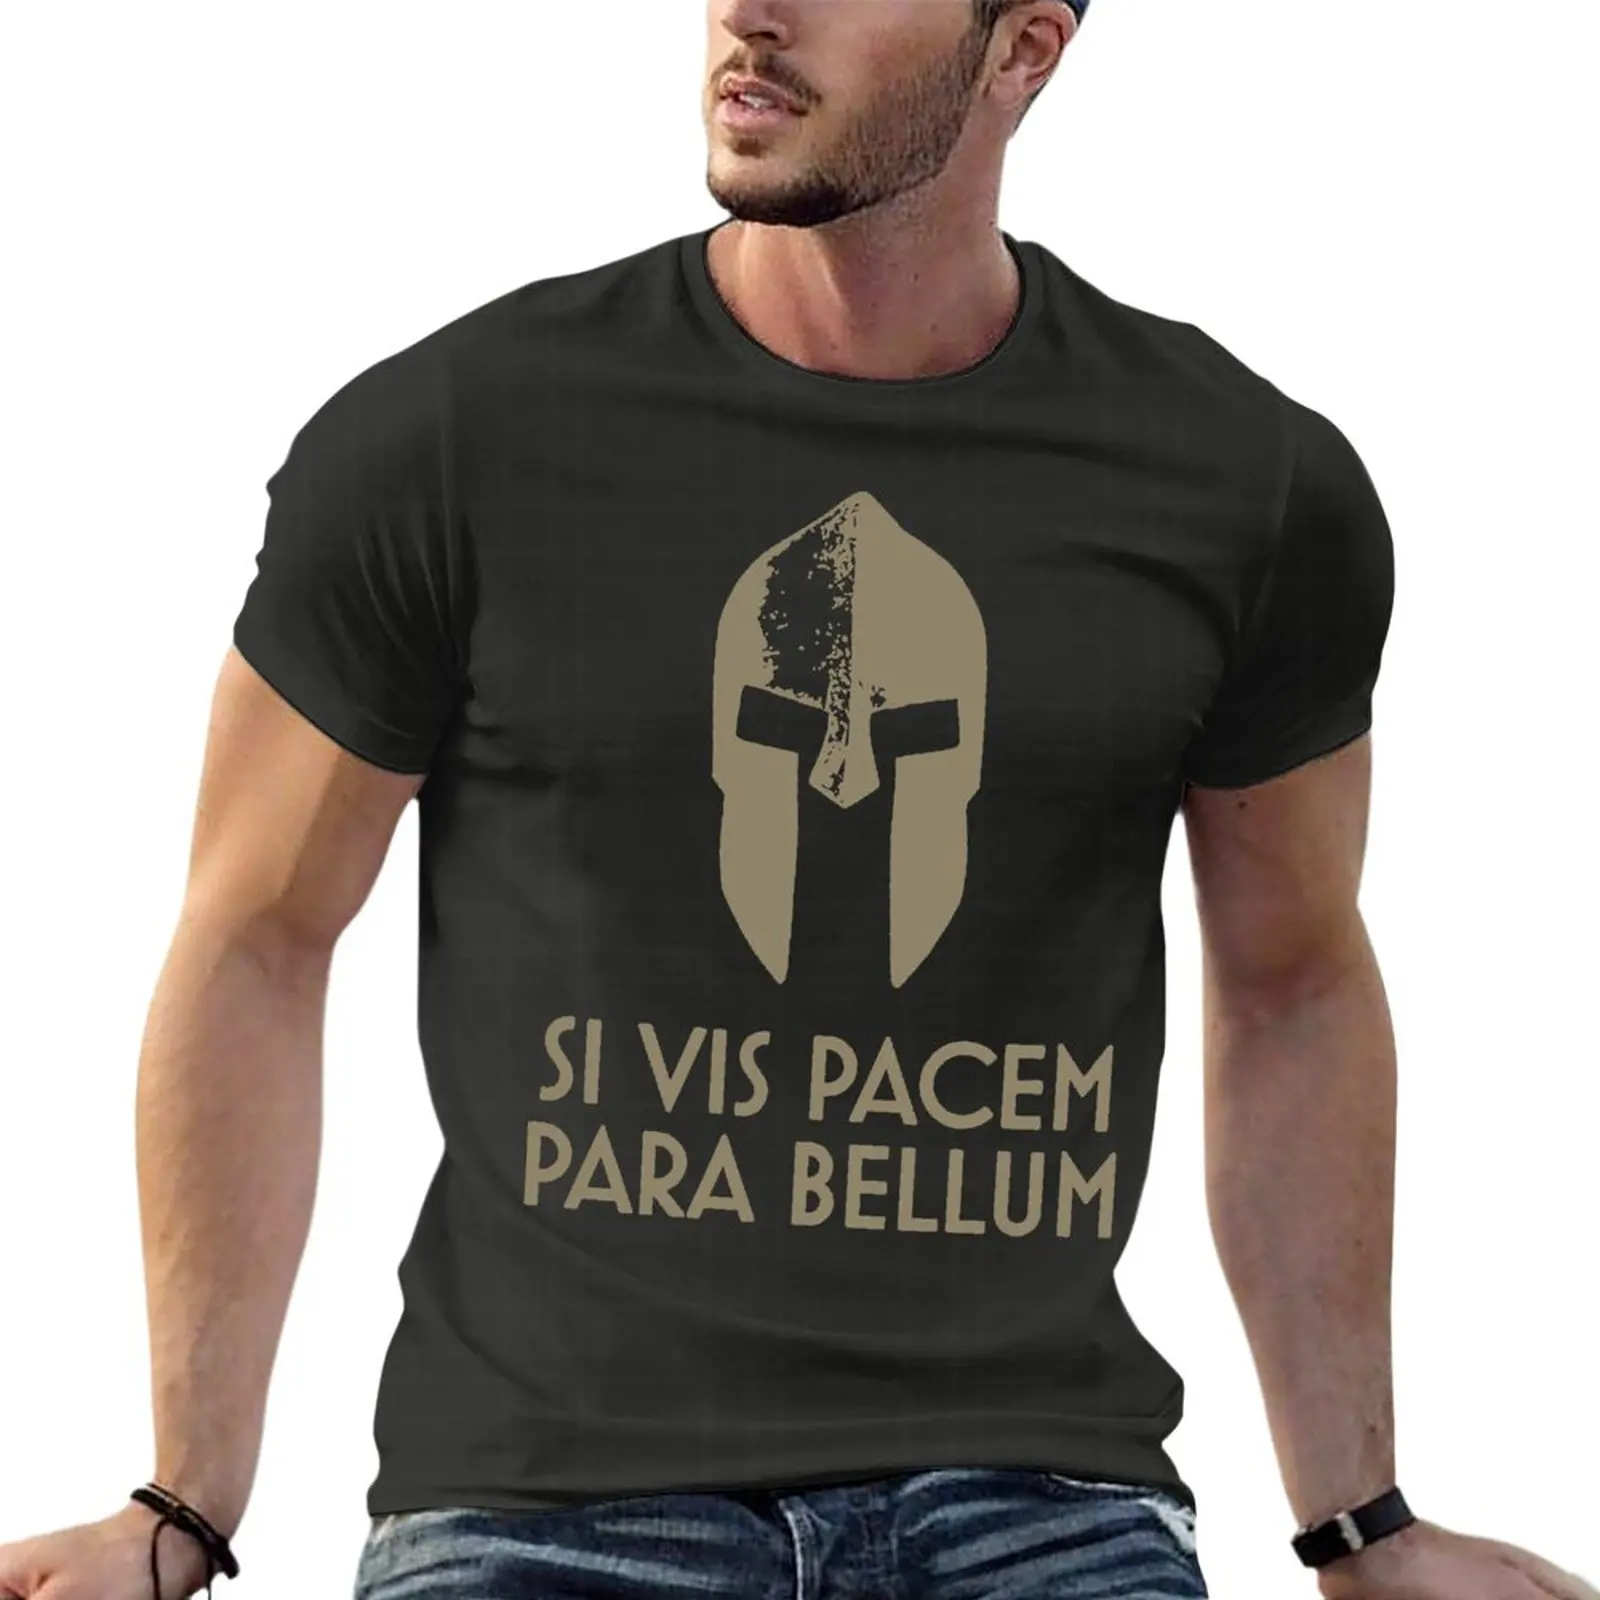 

Spartan Helm Latin Motto Si Vis Pacem Para Bellum Oversized Tshirt Fashion Men'S Clothing 100% Cotton Streetwear Large Size Tops